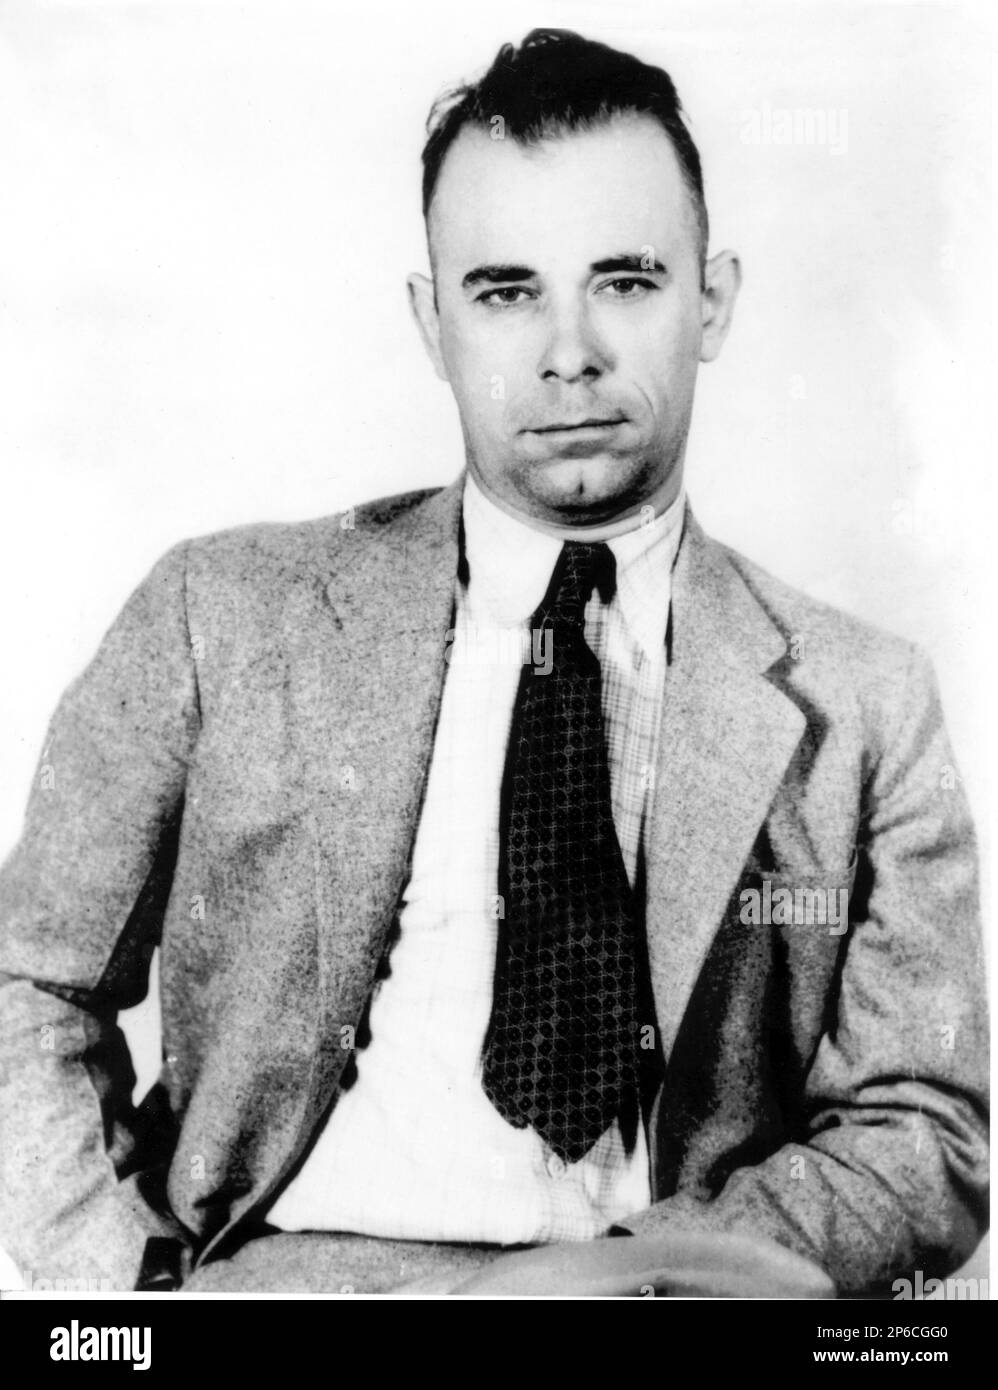 1933 , USA : The american gangster JOHN Herbert DILLINGER ( 1902 - 1934 ) , killed by FBI during a fire fighting -  CRIMINE - CRIMINALE - CRIME - ASSASSINO - CRIMINAL - KILLER - Gangstern - portrait - cravatta - tie  - rapinatore di banche - foto segnaletica ----  Archivio GBB Stock Photo